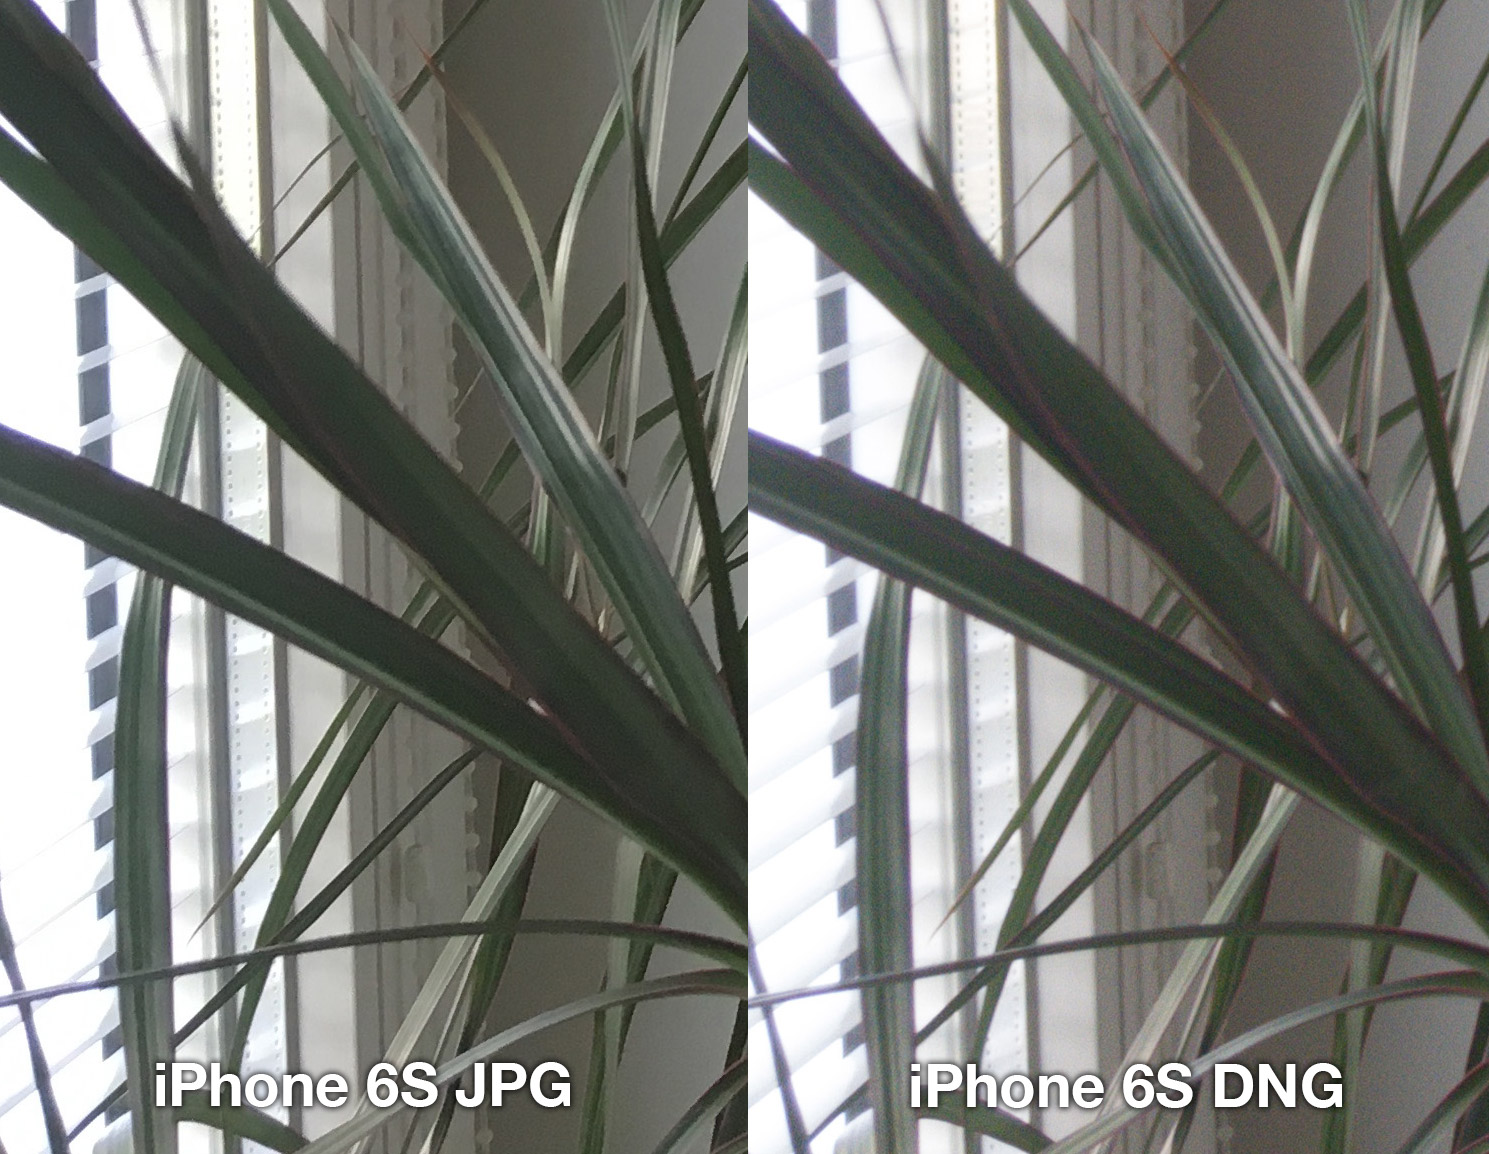 iphone-6s-lightroom-jpg-vs-dng-3